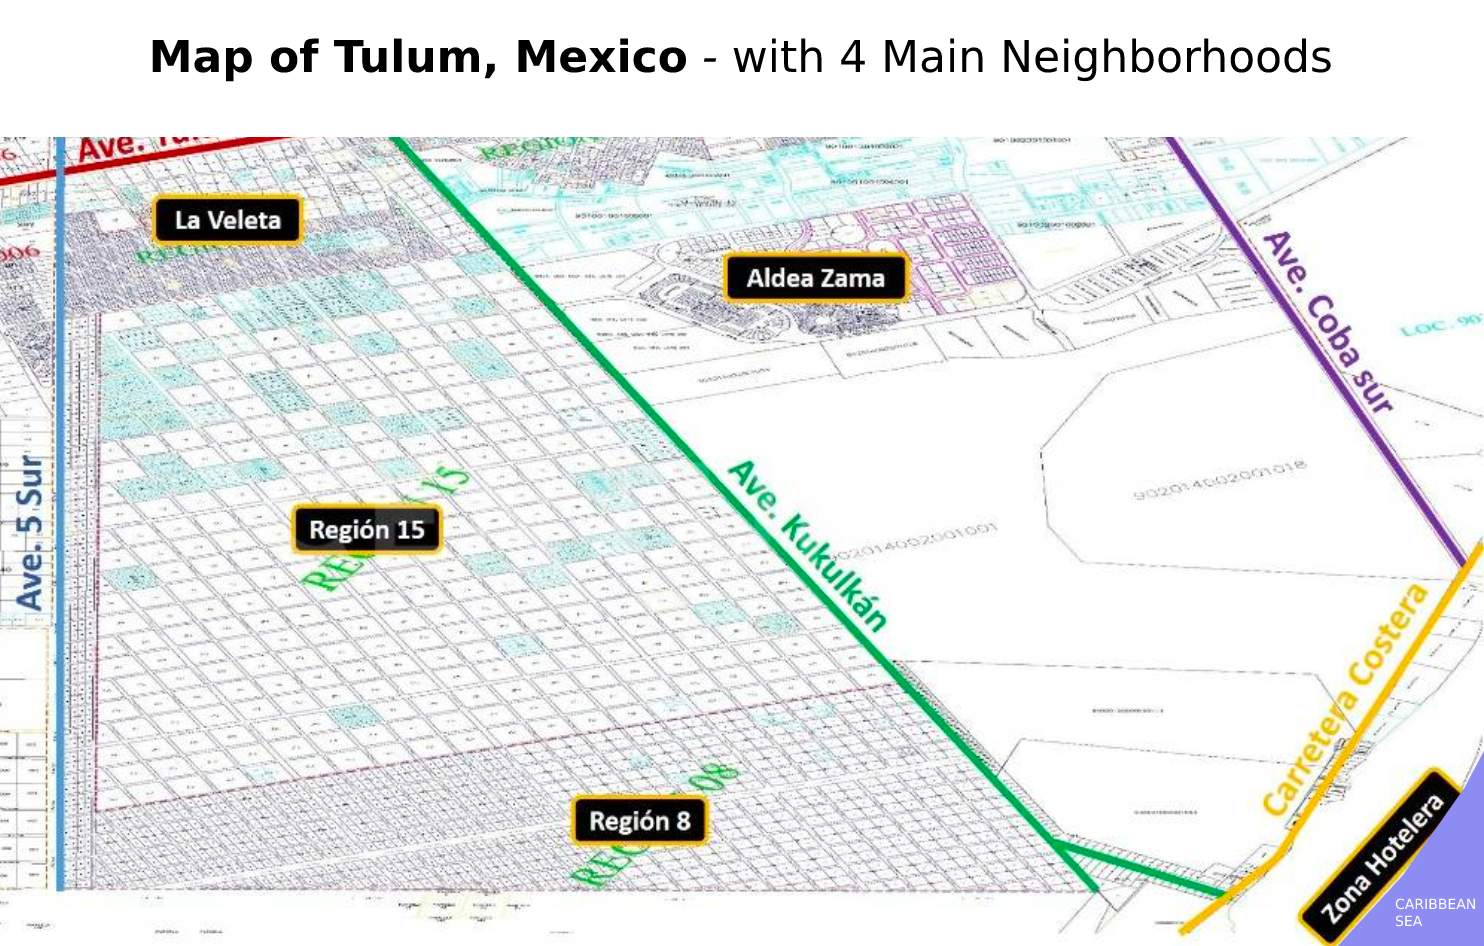 Map of Tulum, Mexico with 4 Main neighborhoods - Aldea Zama, Region 15, Region 8, and La Veleta.